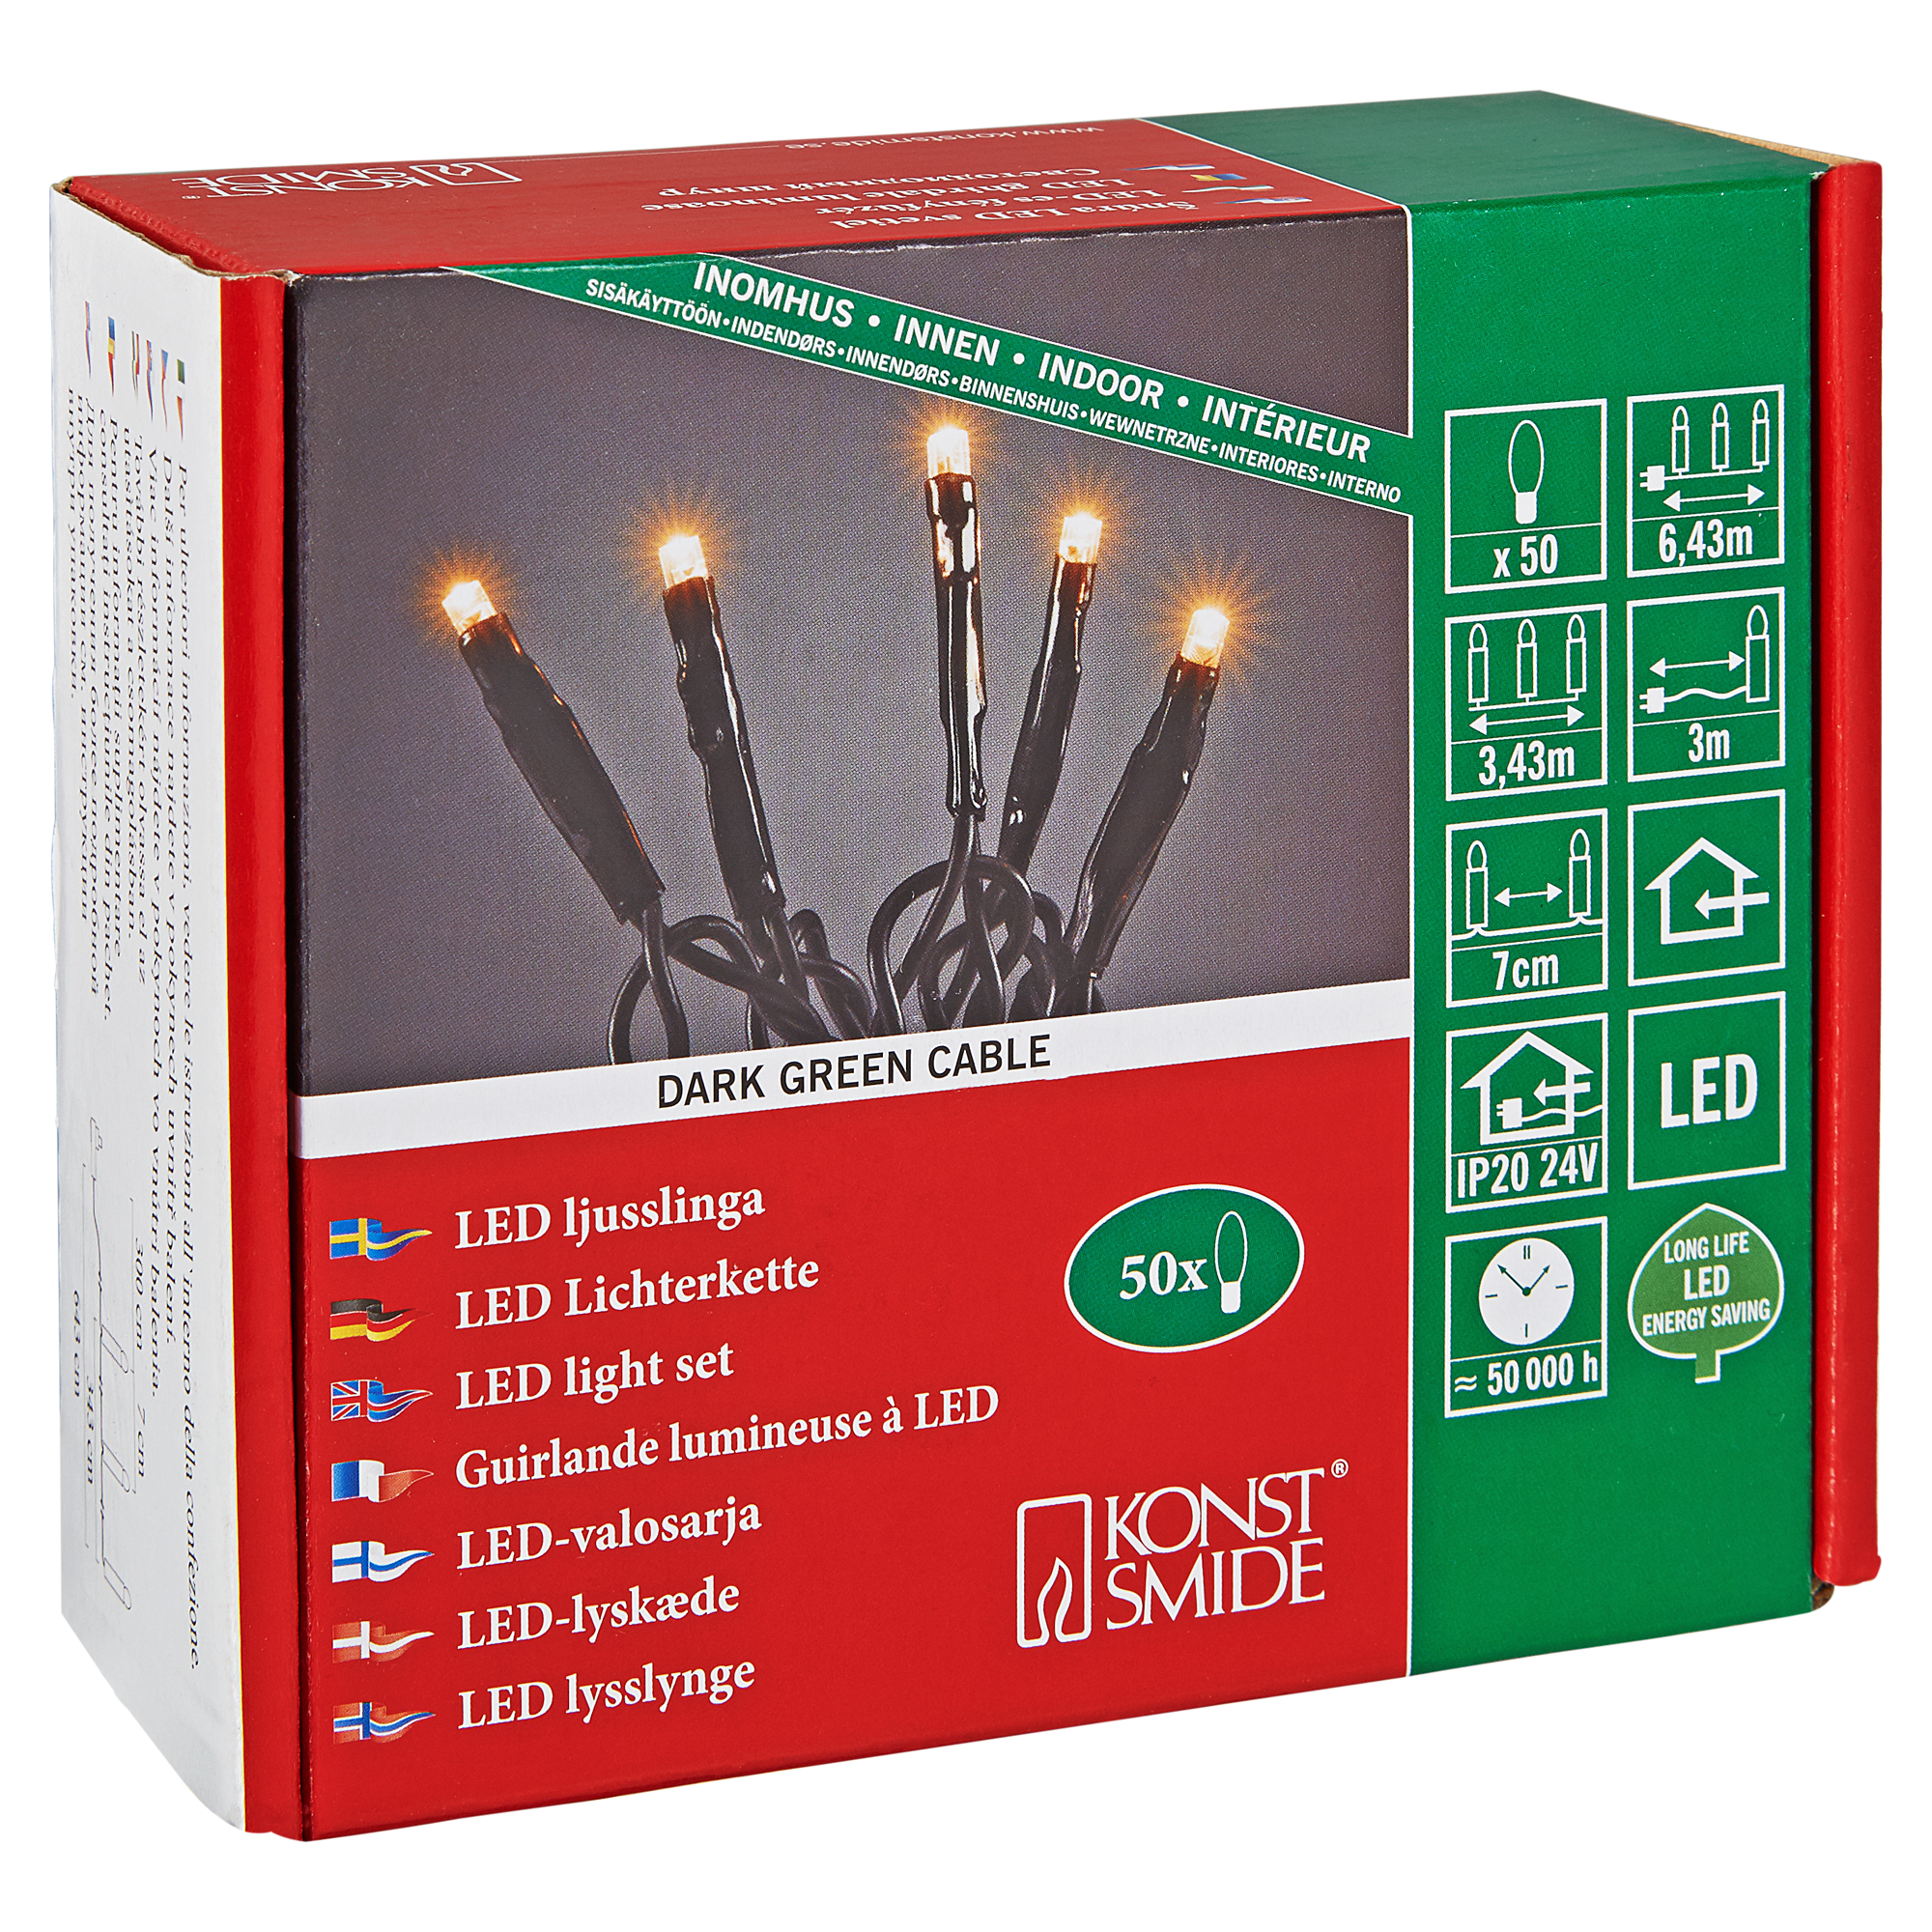 Lichtekette 50 LED dunkelgrün + product picture